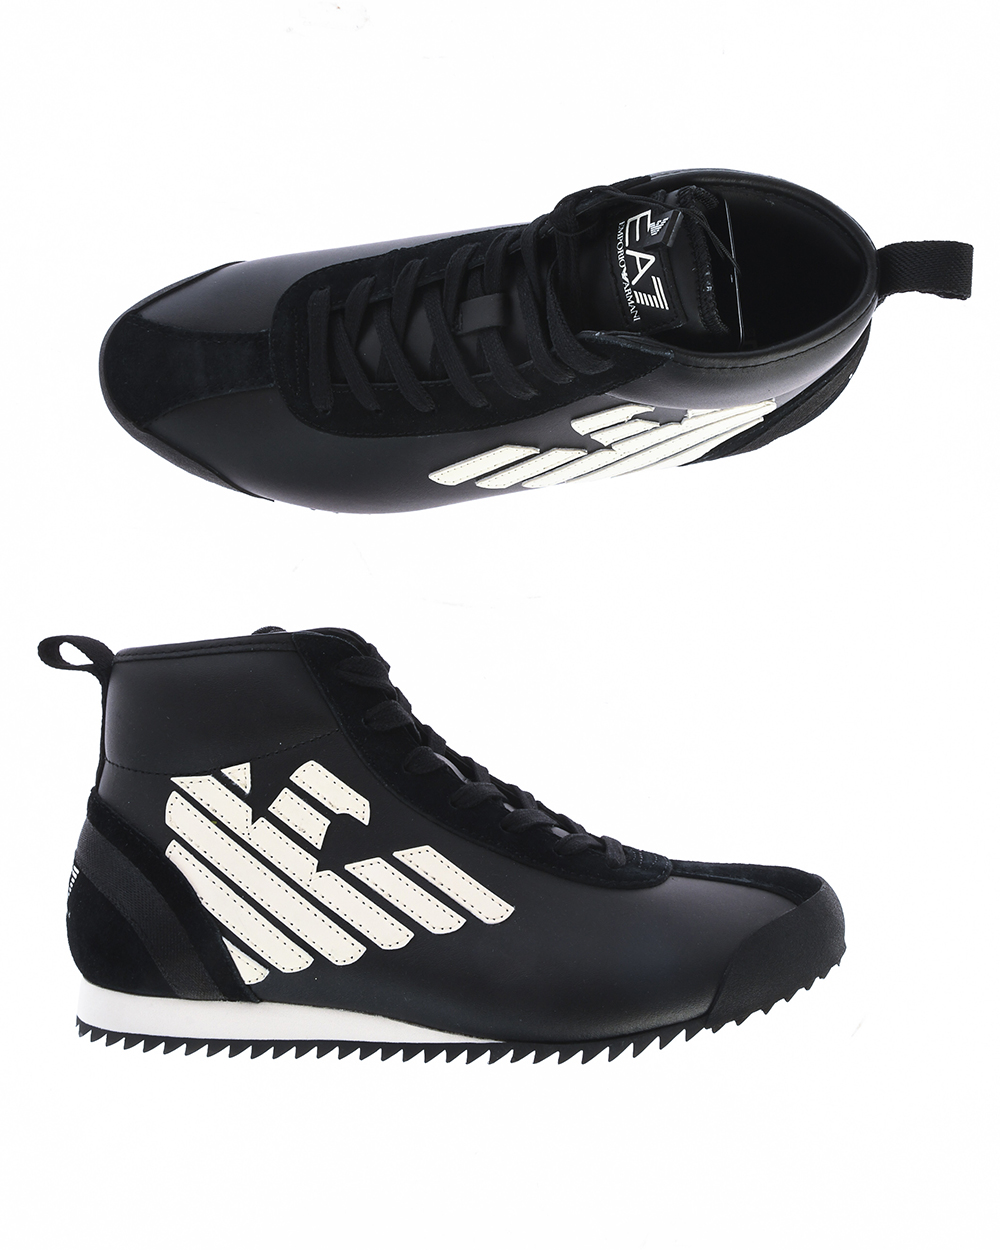 Shoes Sneakers EMPORIO ARMANI ea7 Shoes Leather Mens Black x8z015 xk108  a120 | eBay